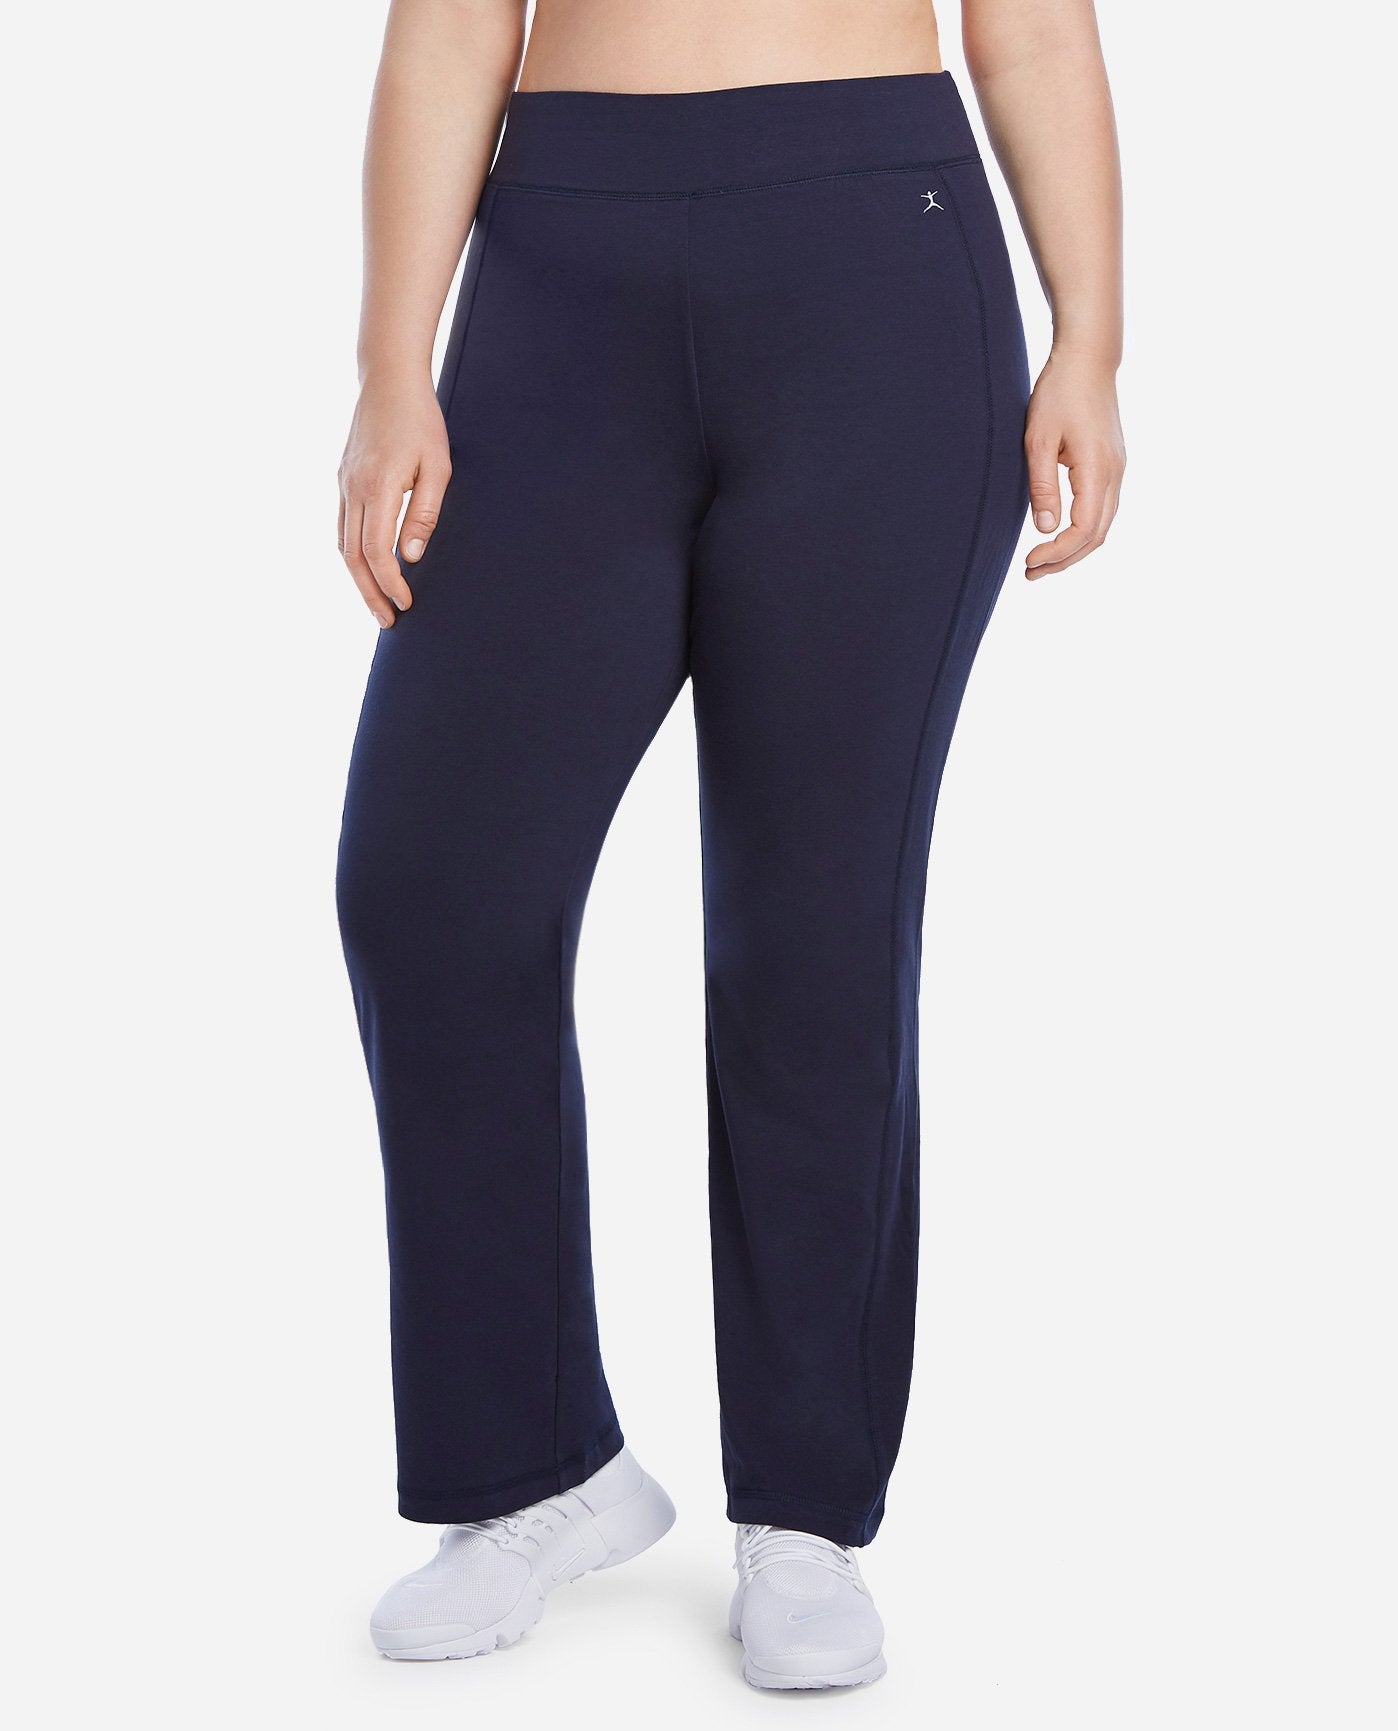 Danskin Now Bootcut Yoga Pants XL - קרמיקה אביב